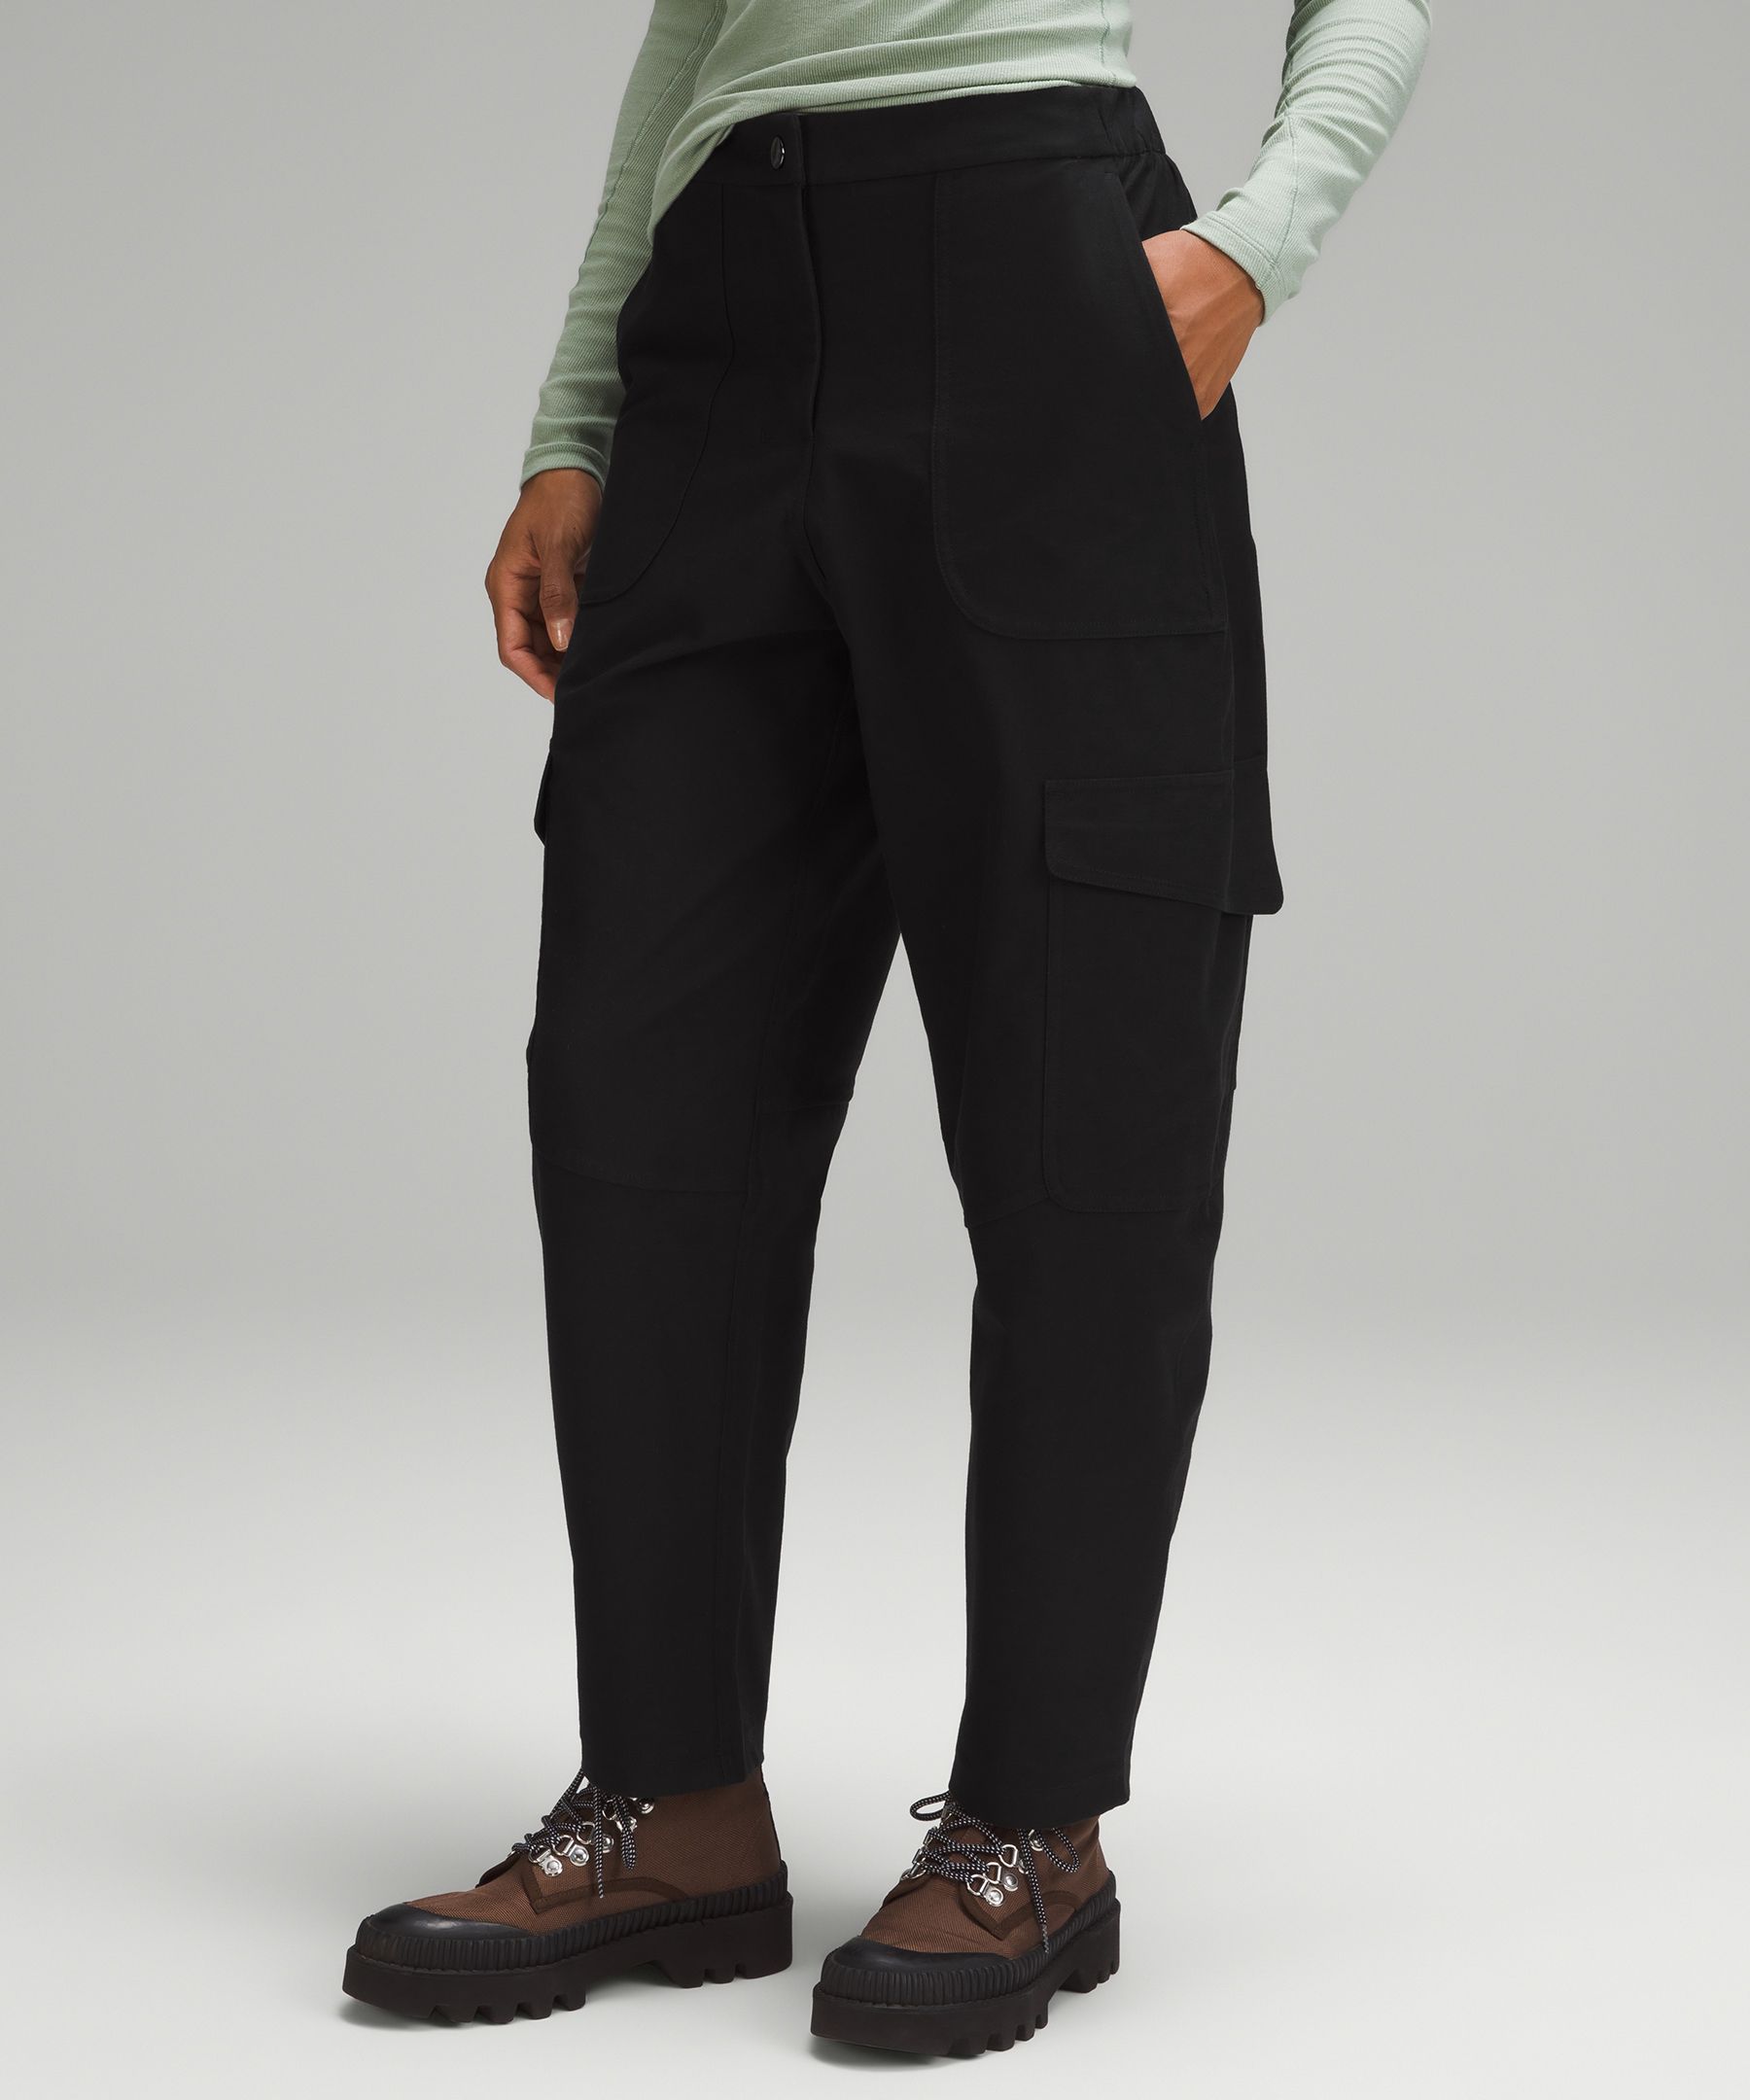 Lululemon Women's Pants Medium Size 6/8 Stretch Pockets Travel Casual  Gray/Black